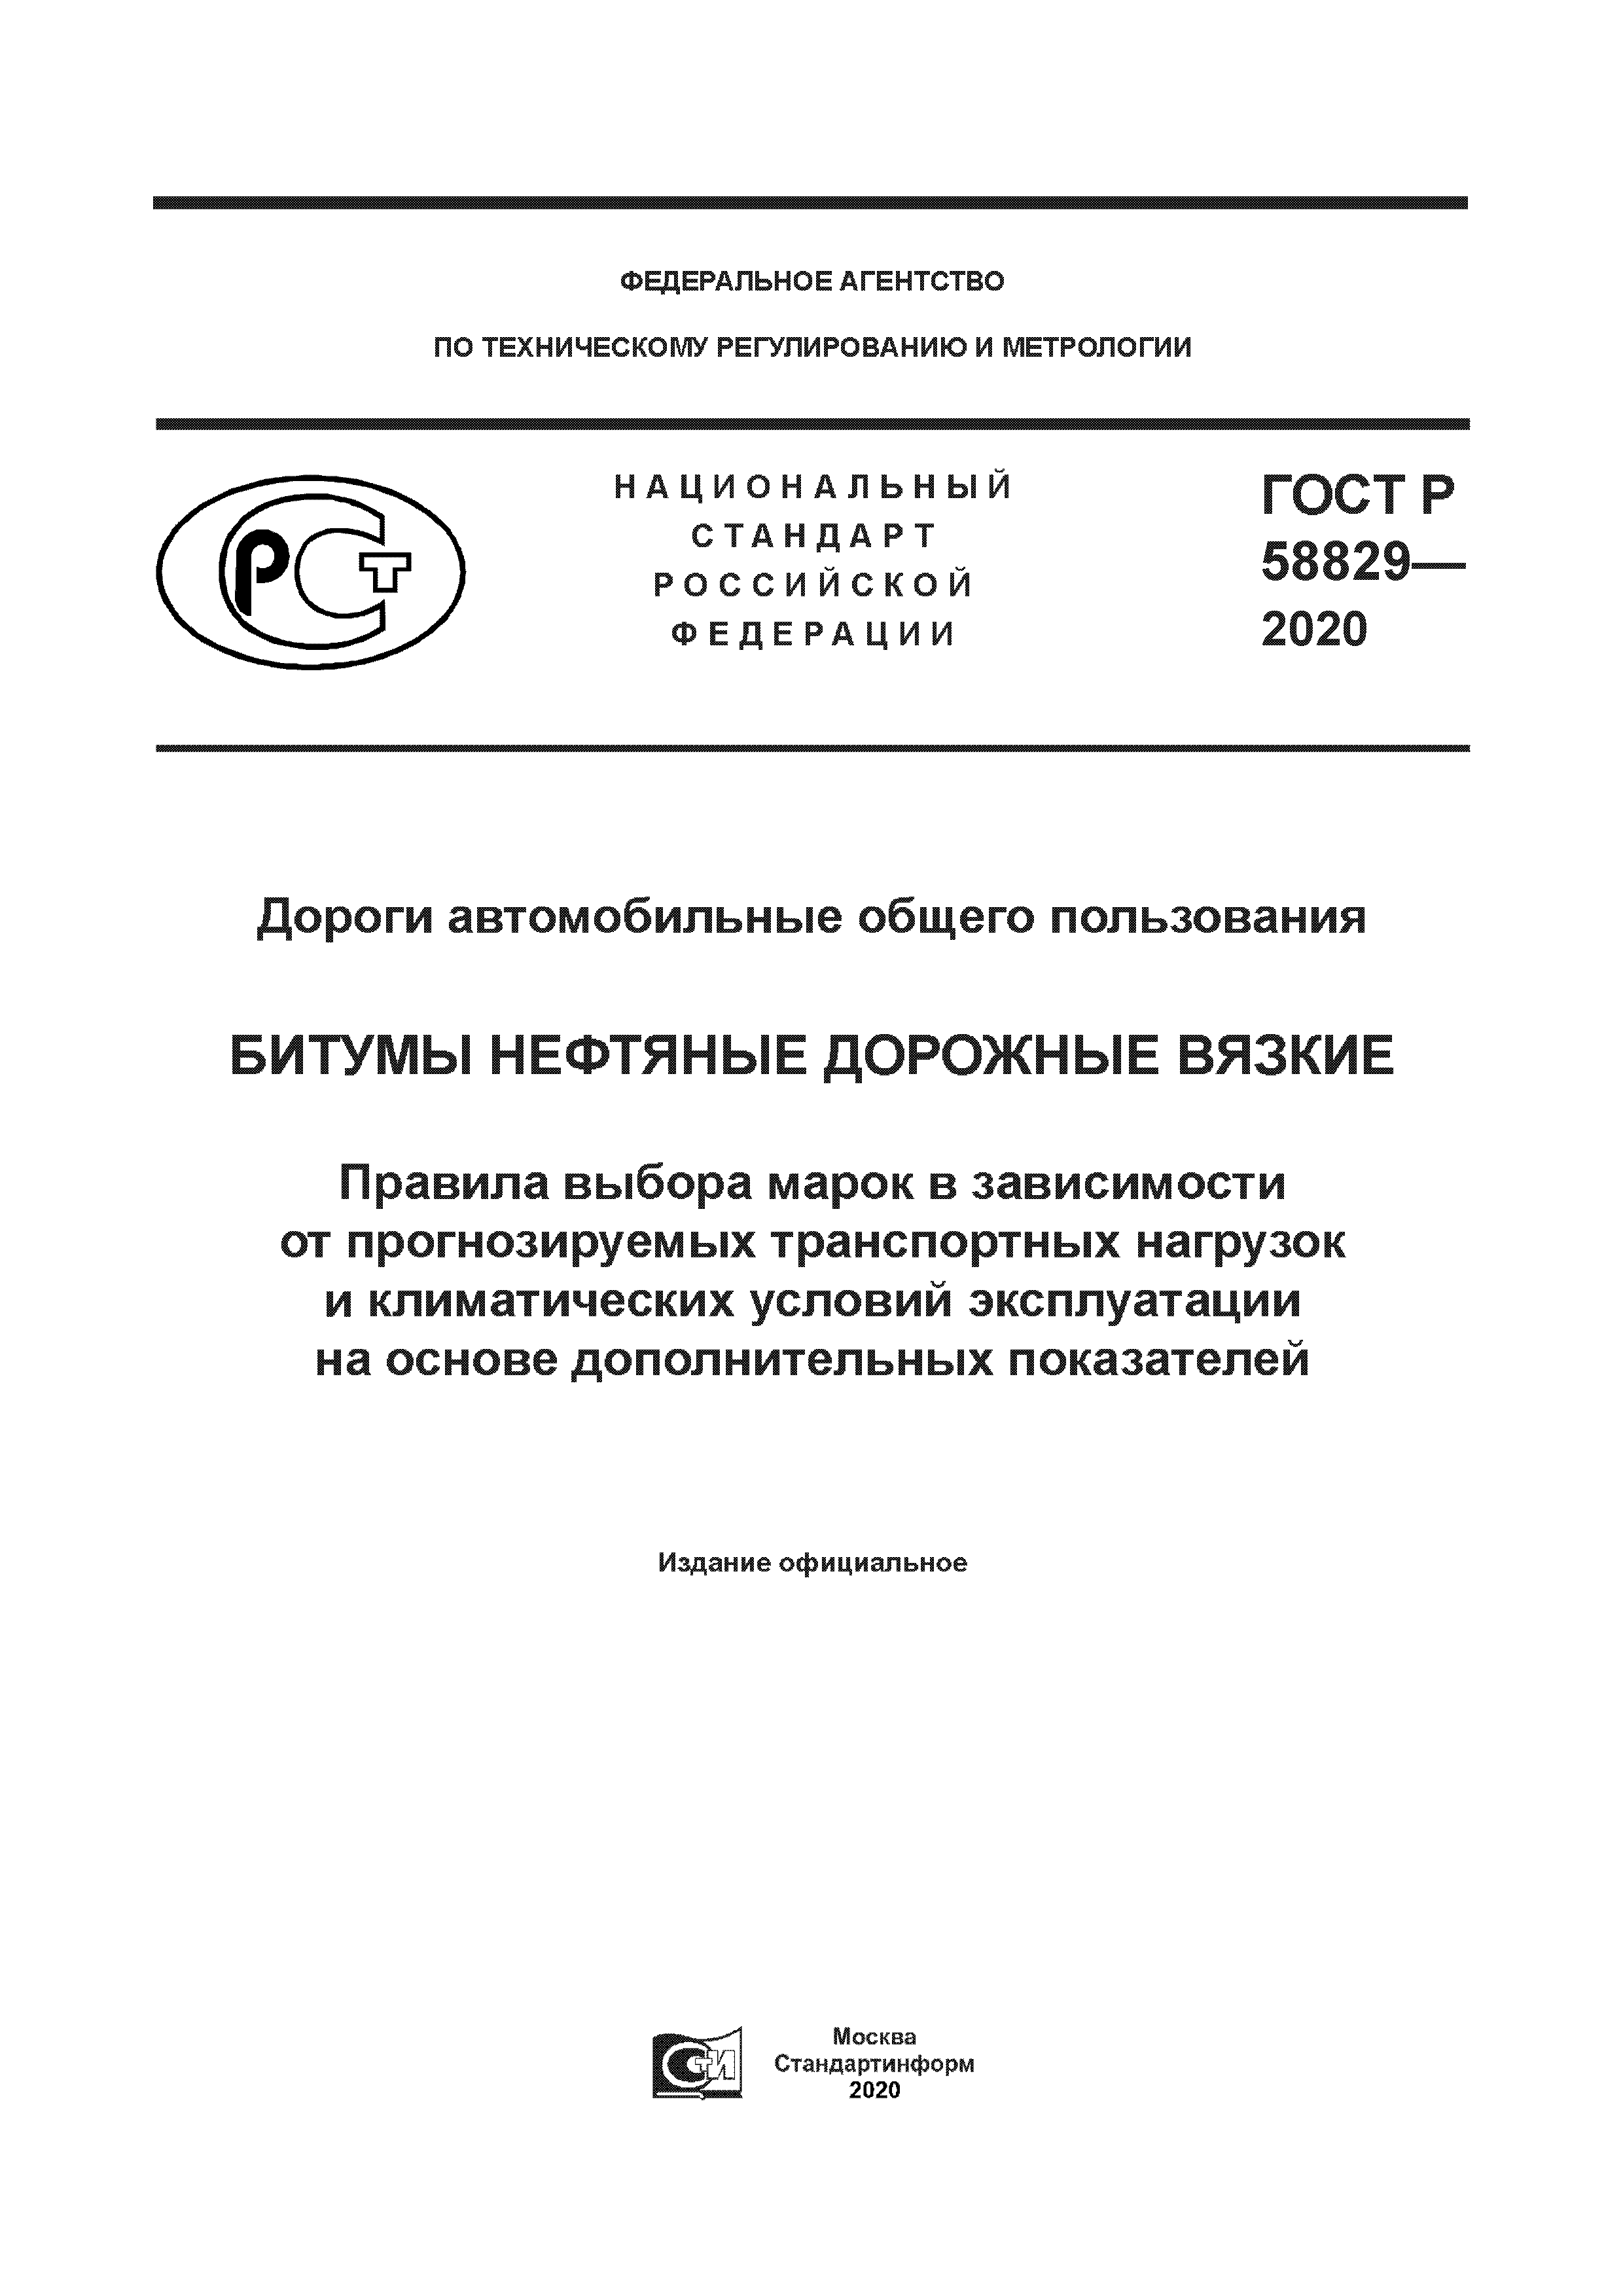 ГОСТ Р 58829-2020